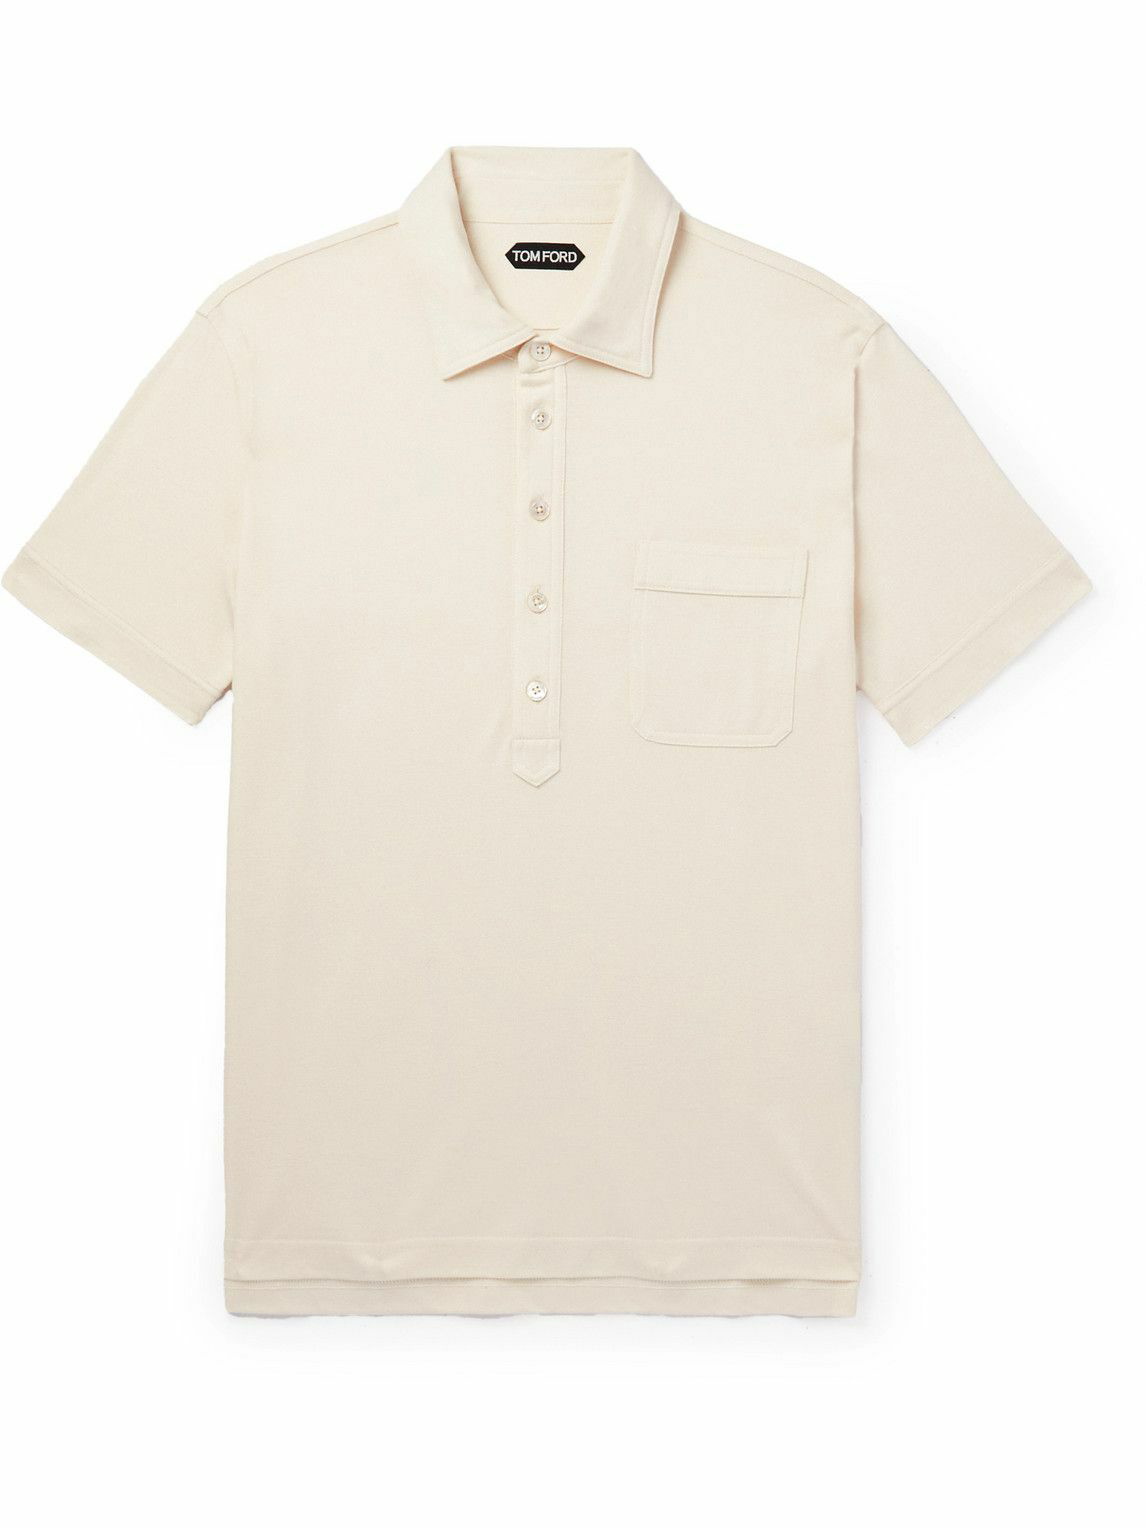 TOM FORD short-sleeve polo shirt - Neutrals